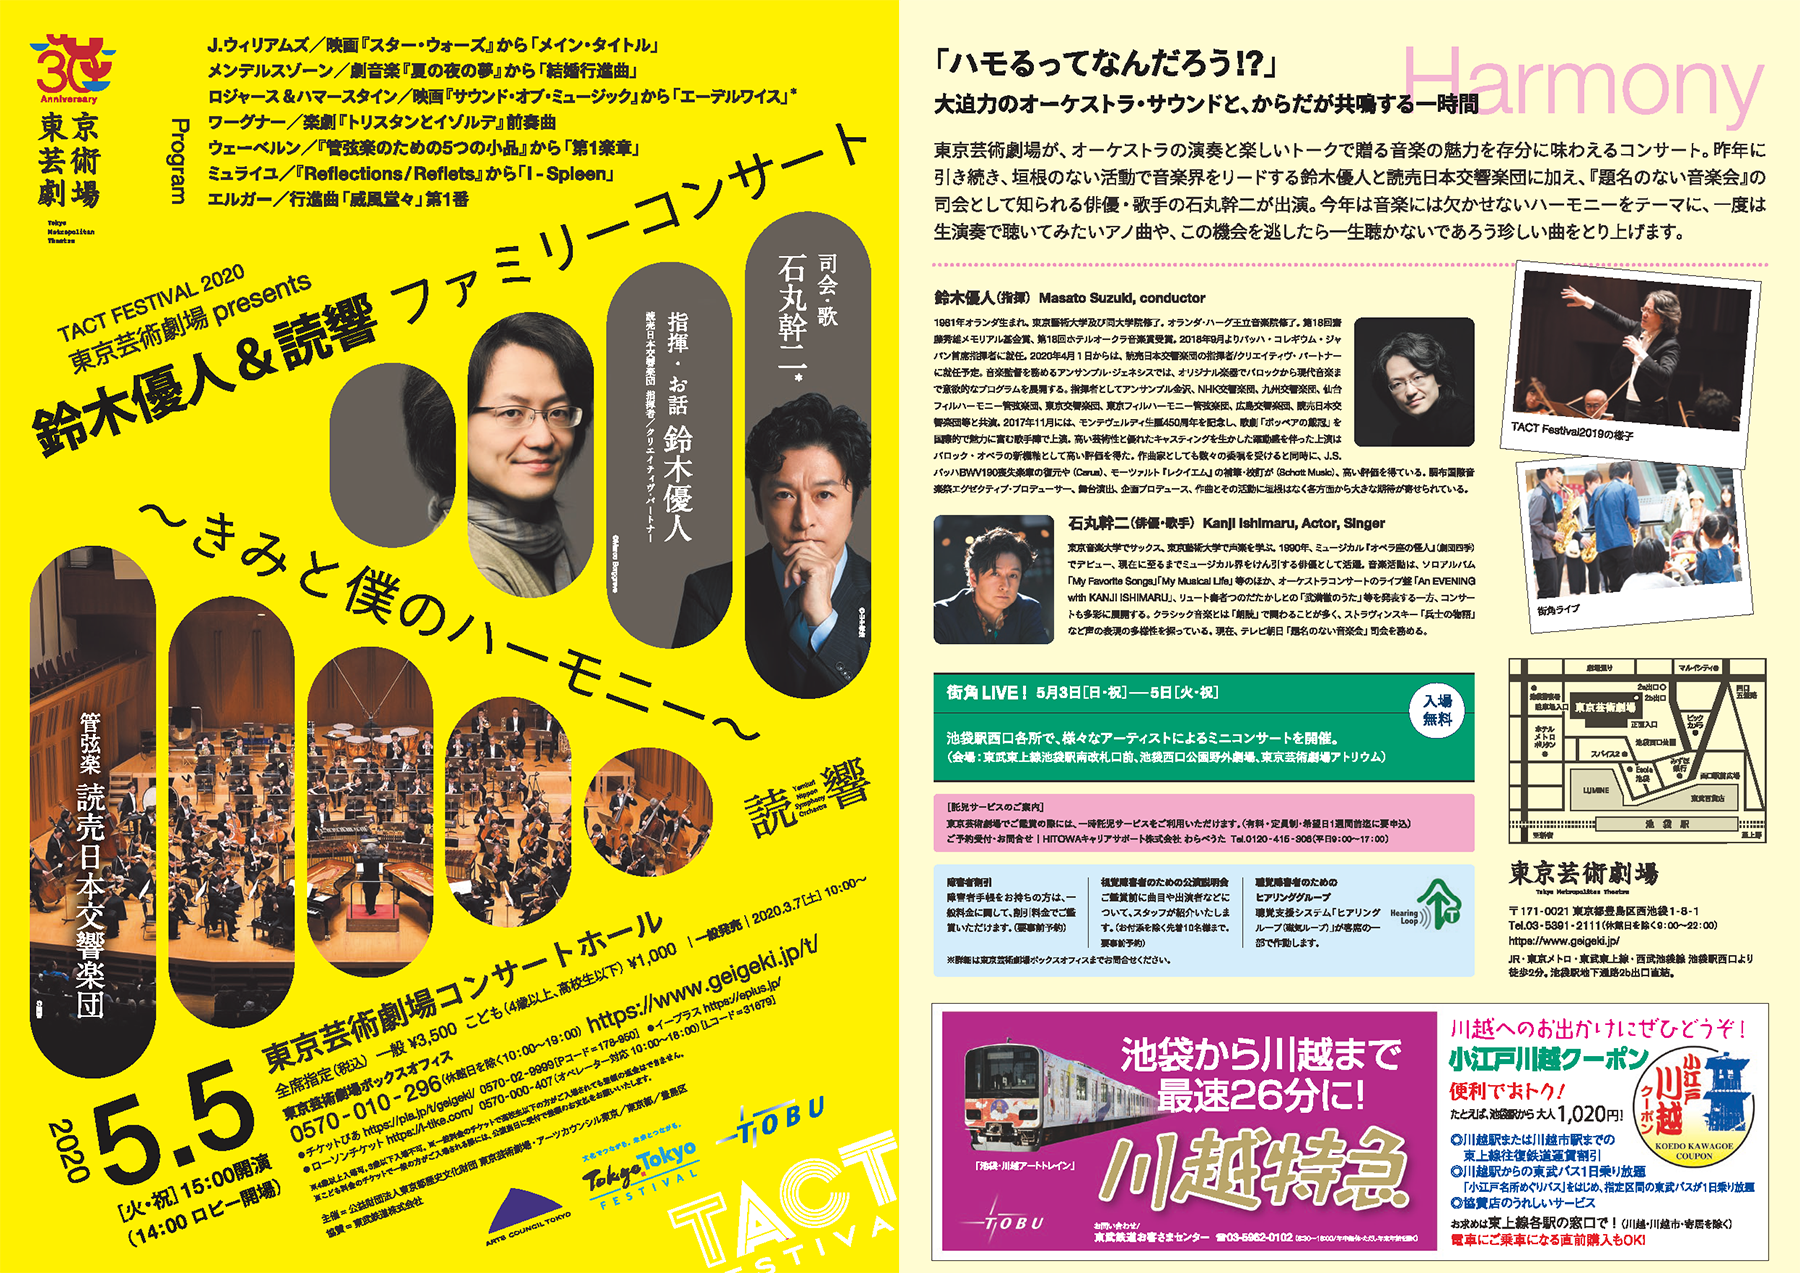 Tokyo Metropolitan Theatre Presents Suzuki Masato Yomiuri Nippon Symphony Orchestra Family Concert Events Arts Council Tokyo